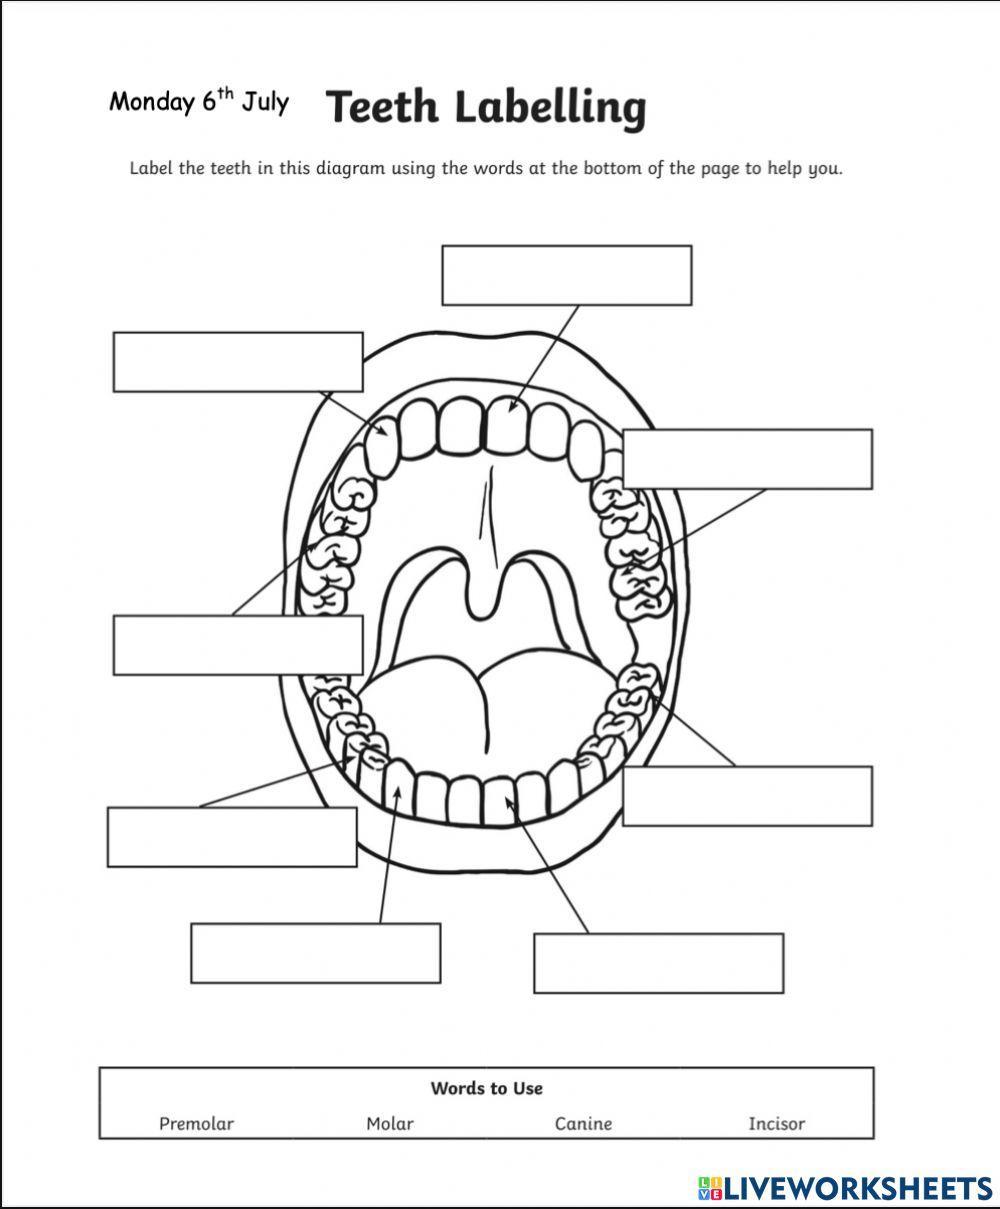 Teeth Labelling Diagram